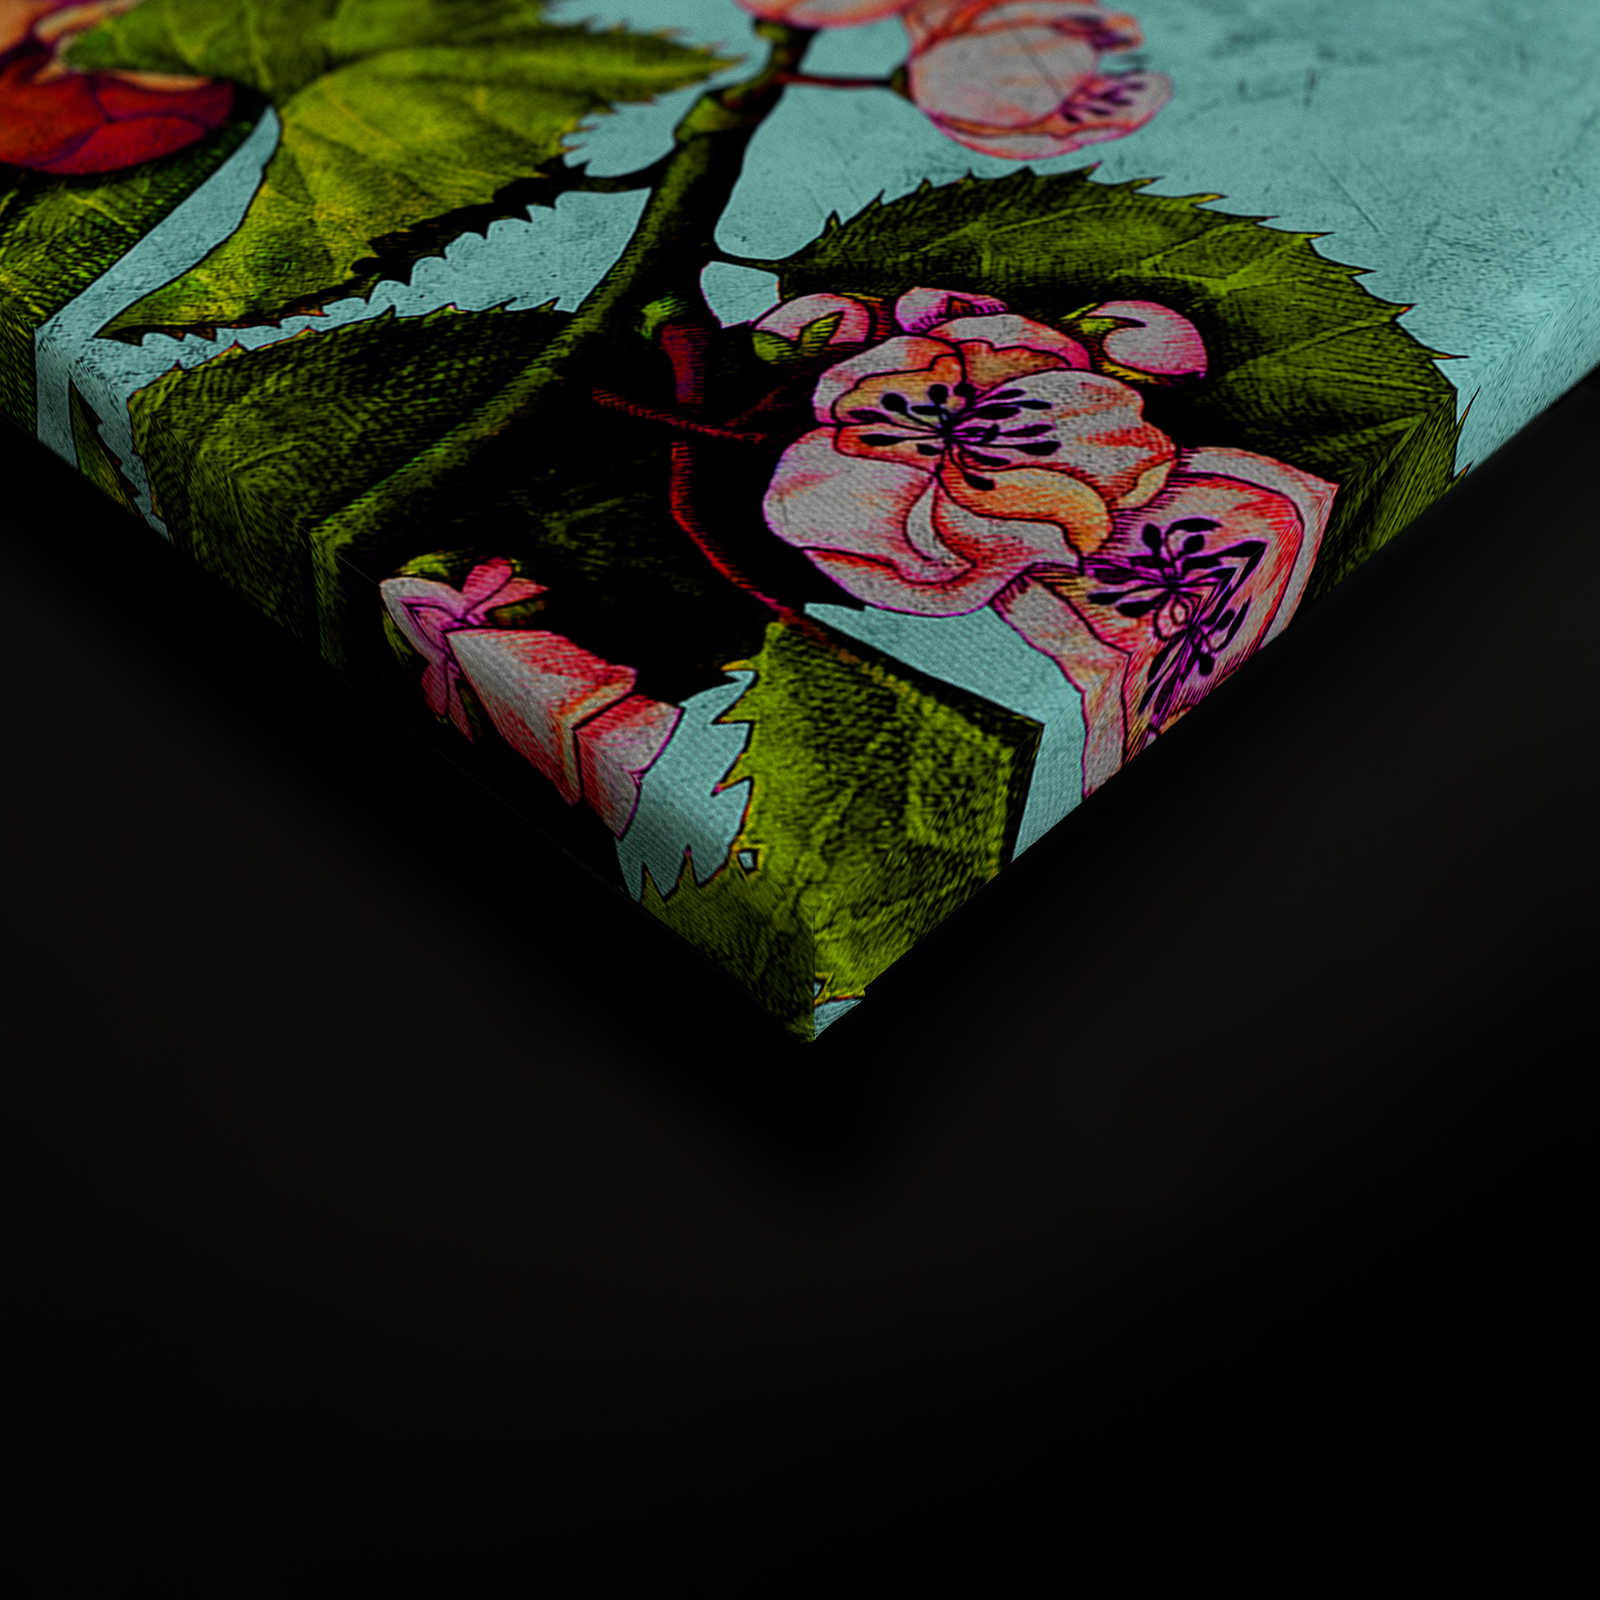             Tropical Passion 1 - Quadro su tela con motivi floreali - 1,20 m x 0,80 m
        